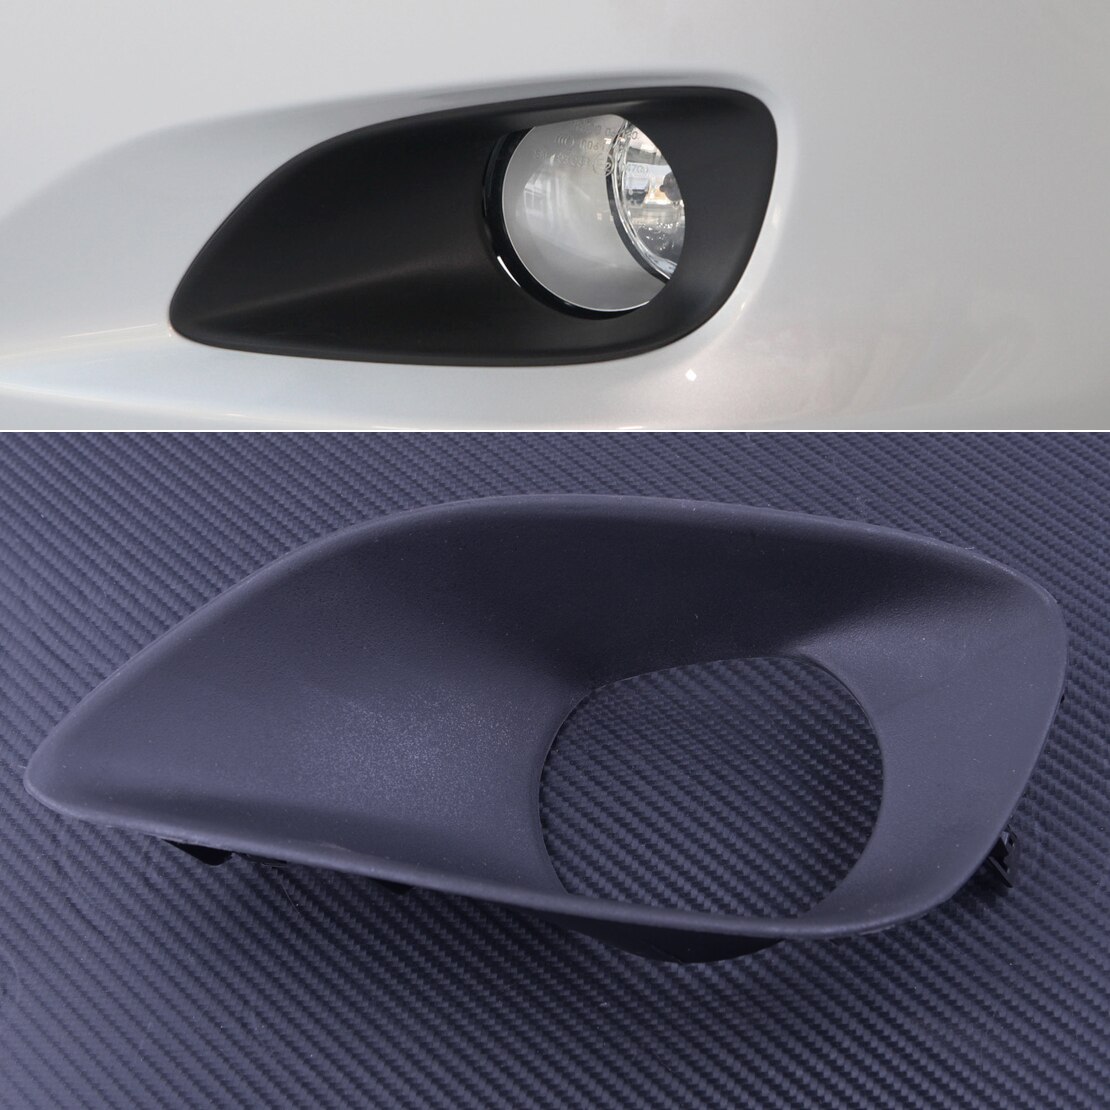 Dwcx Auto Zwart Links Mistlamp Lamp Cover Trim Plastic Fit Voor Toyota Yaris Belta Vios Limo 2007